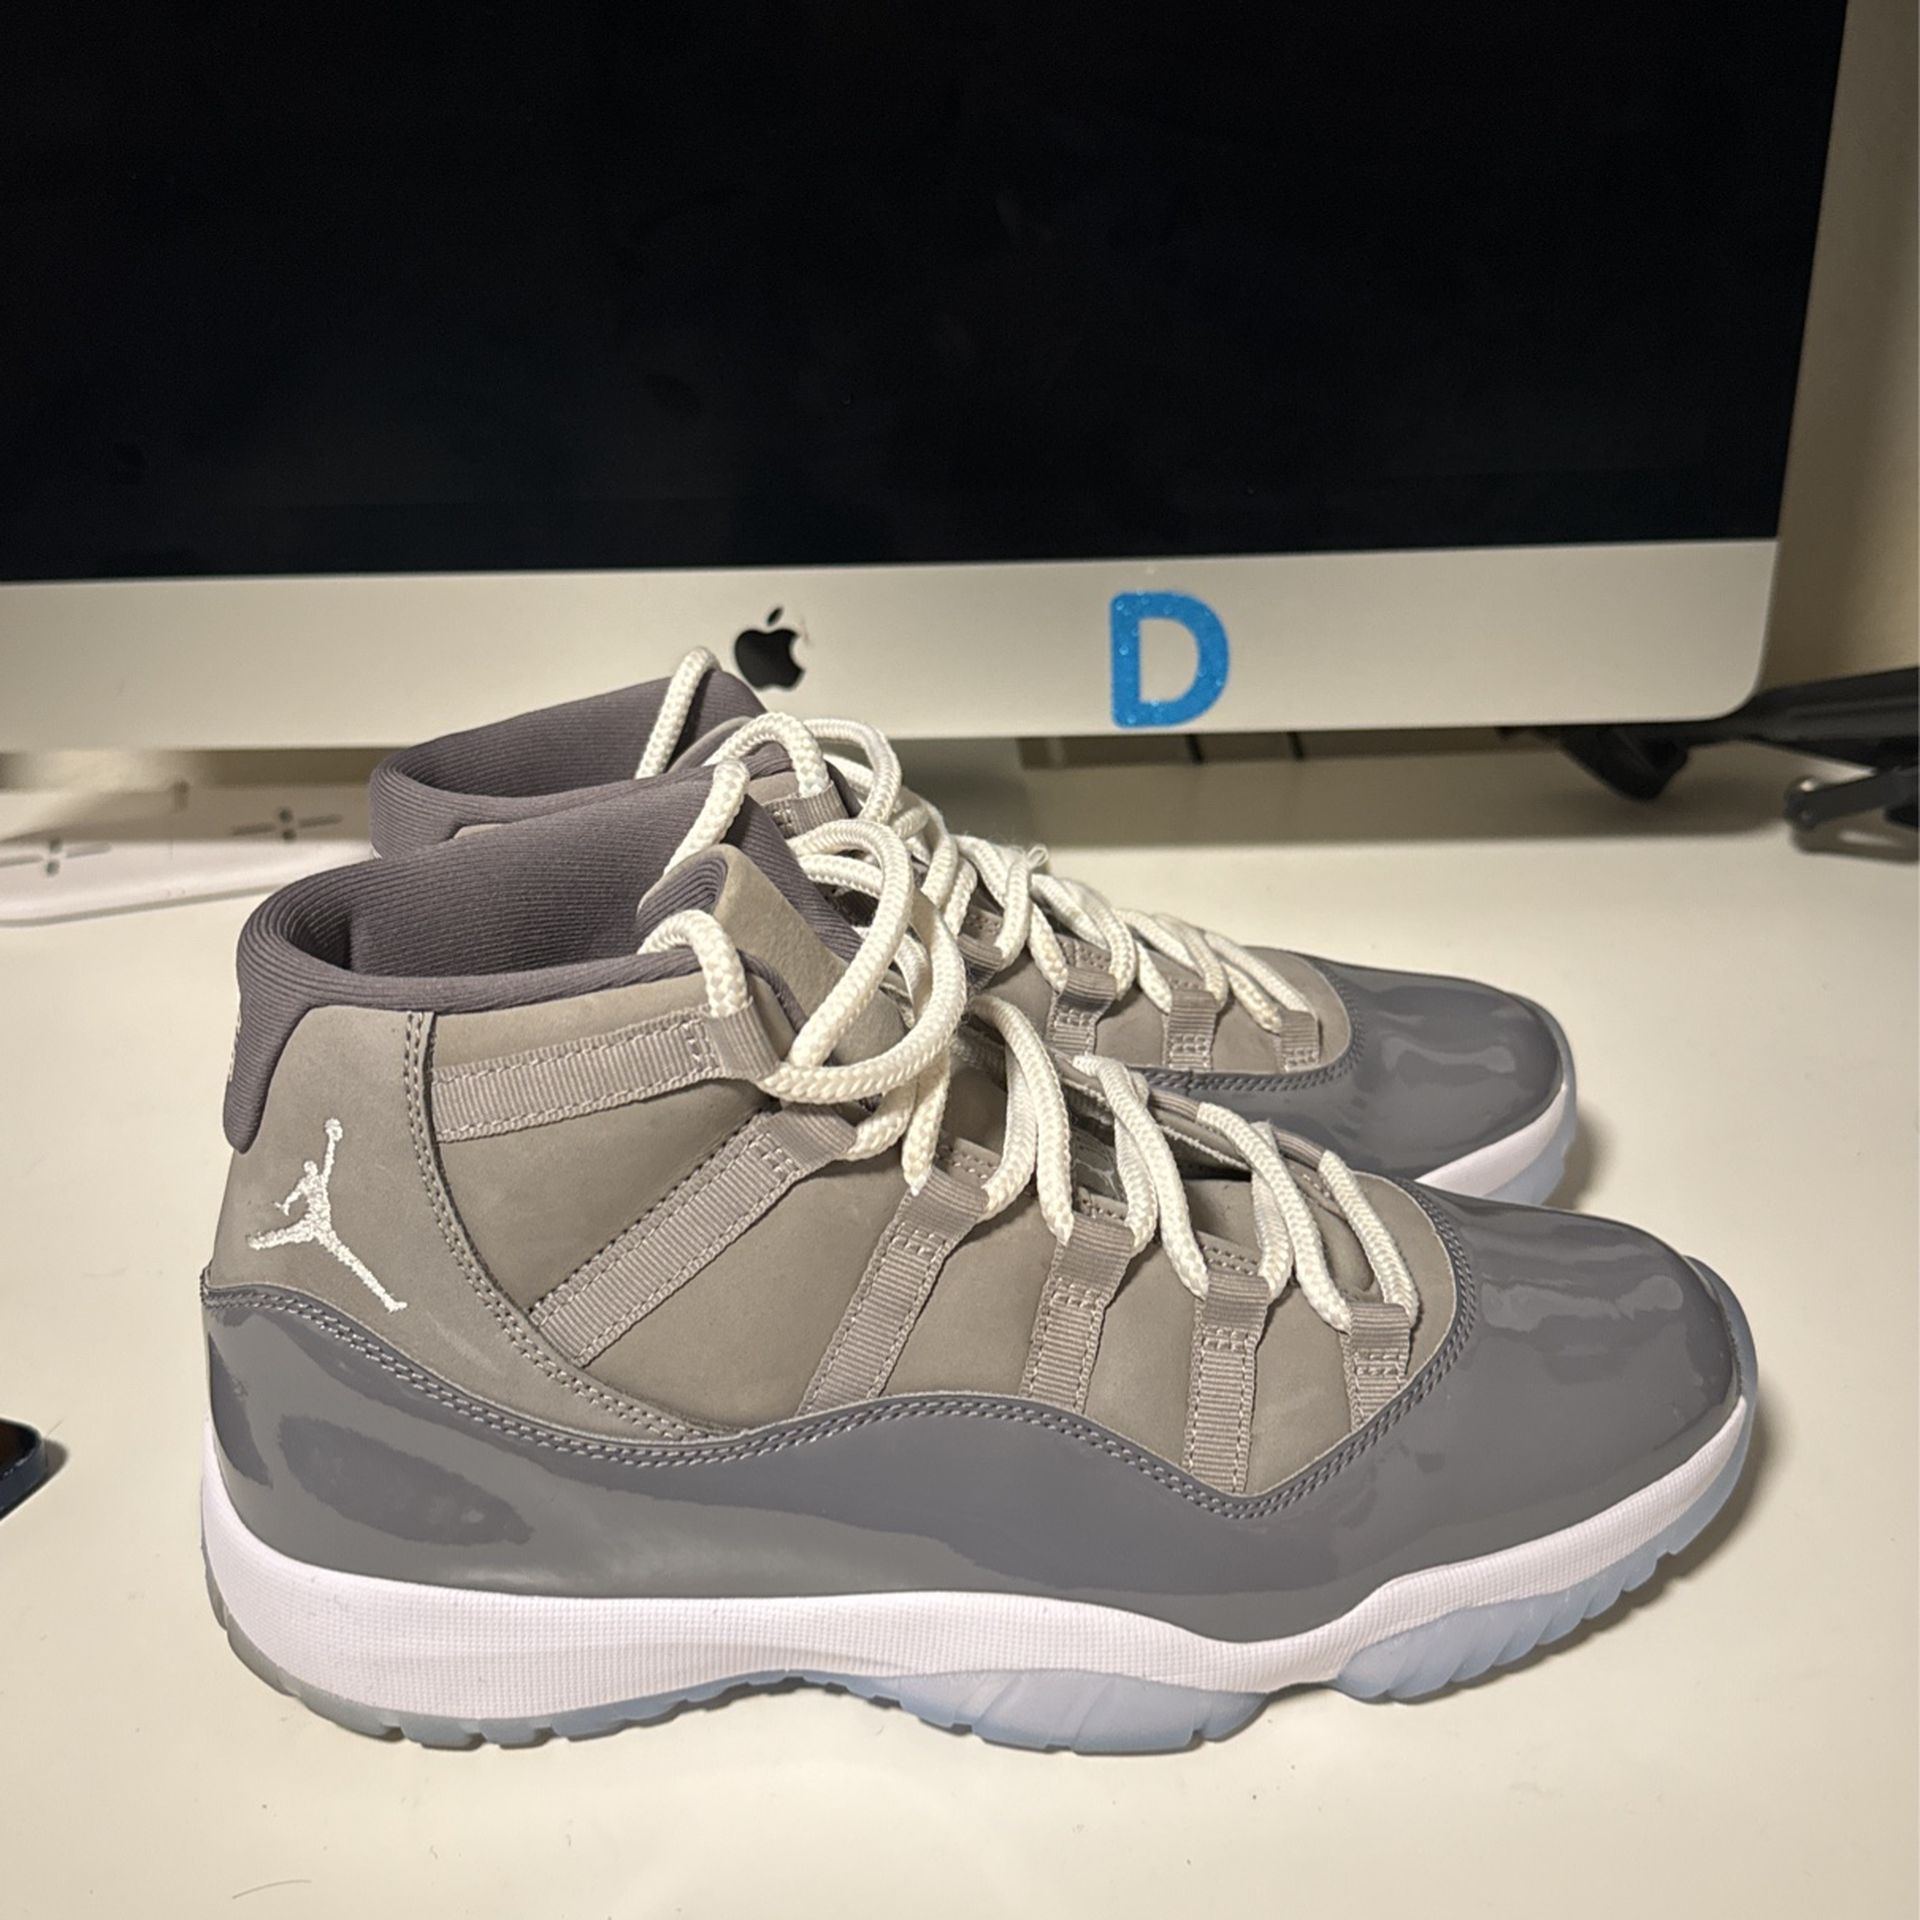 Jordan 11 Retro Cool Gray Size 10.5